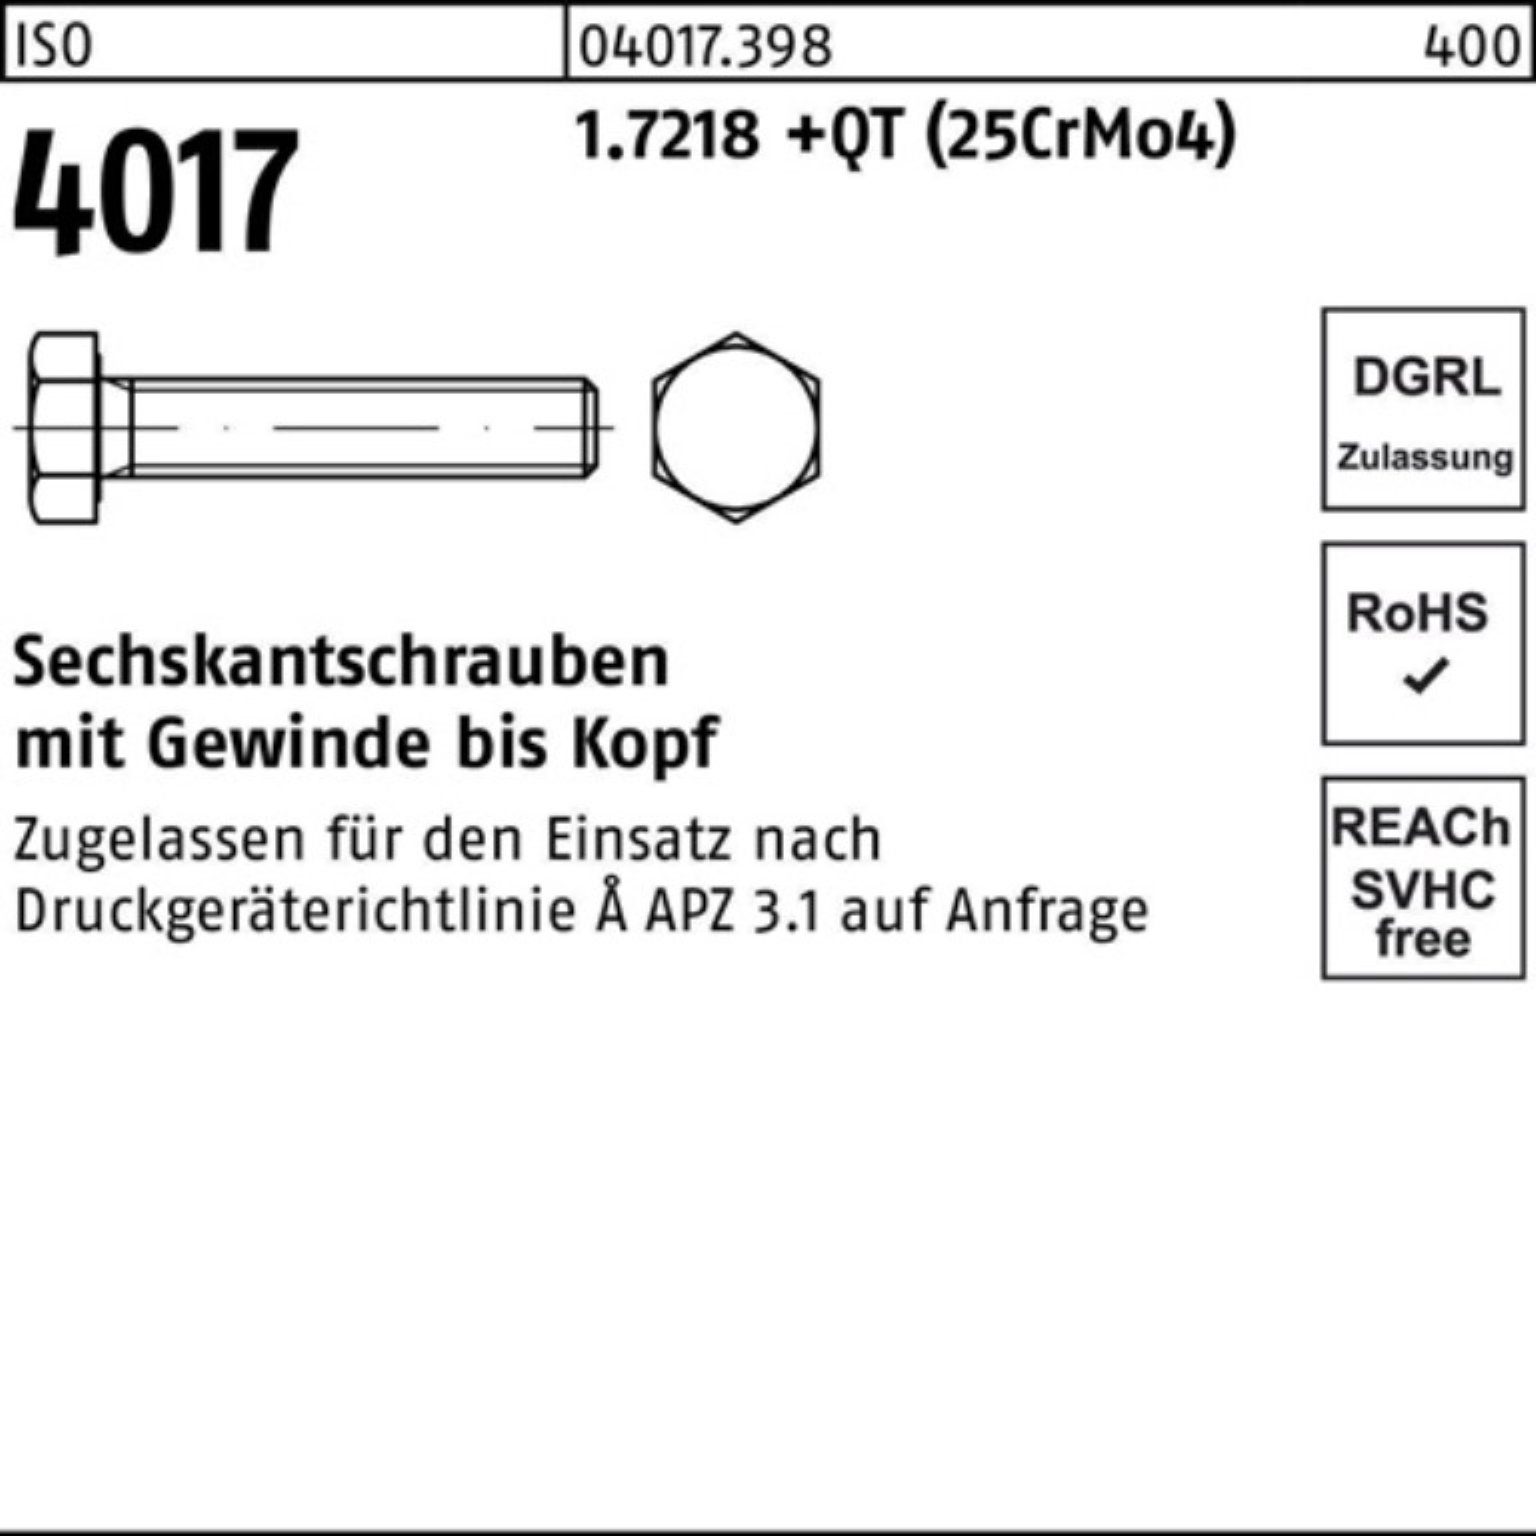 Pack 1.7218 Sechskantschraube M24x VG (25CrMo4) 4017 150 Bufab ISO 100er +QT Sechskantschraube